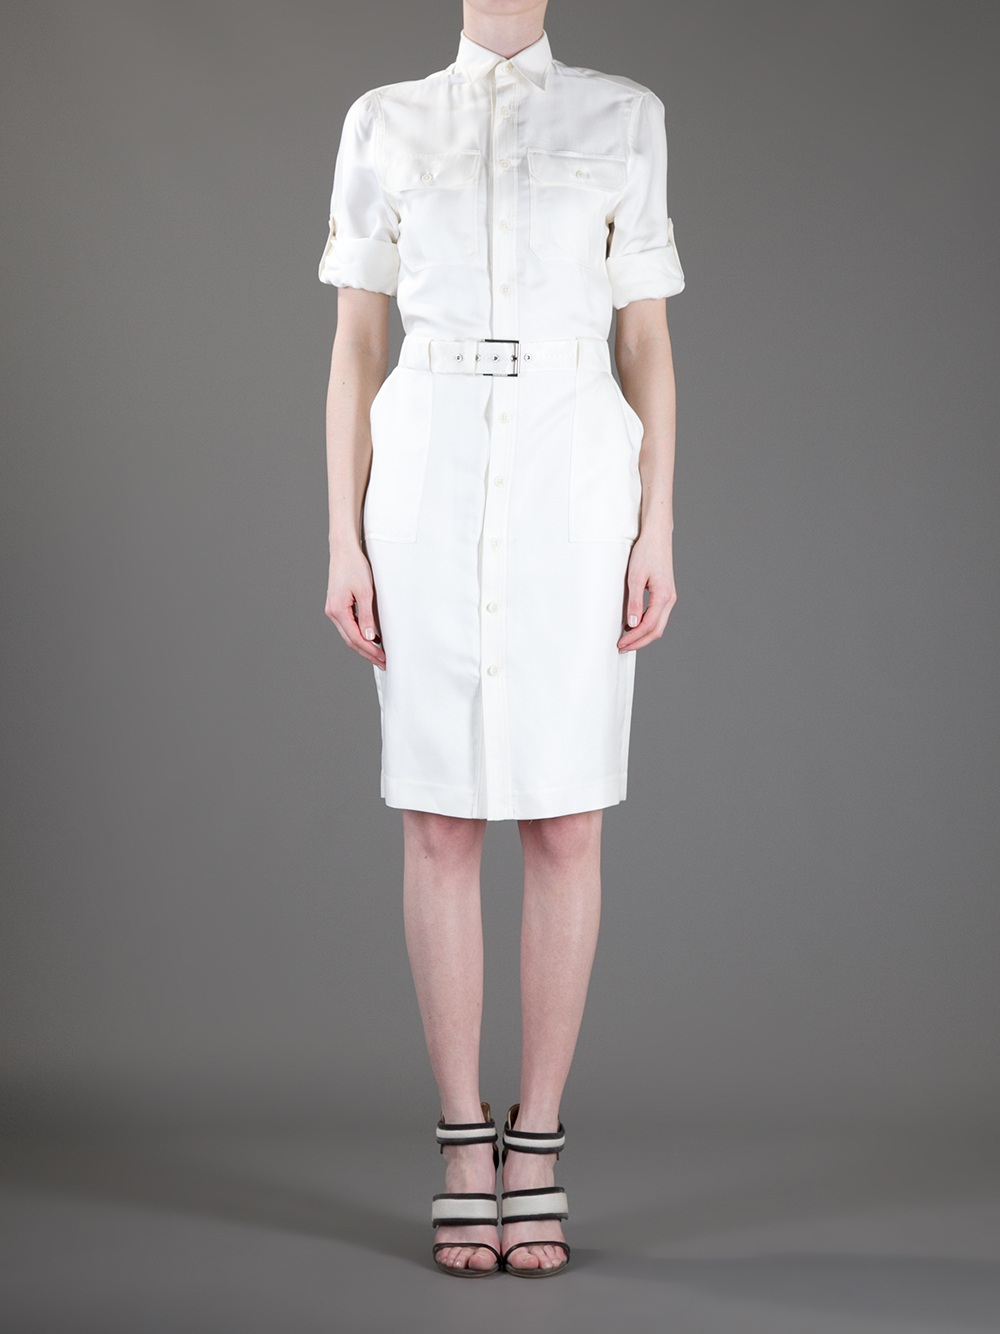 Lyst Ralph  Lauren  Black Label Shirt  Dress  in White 